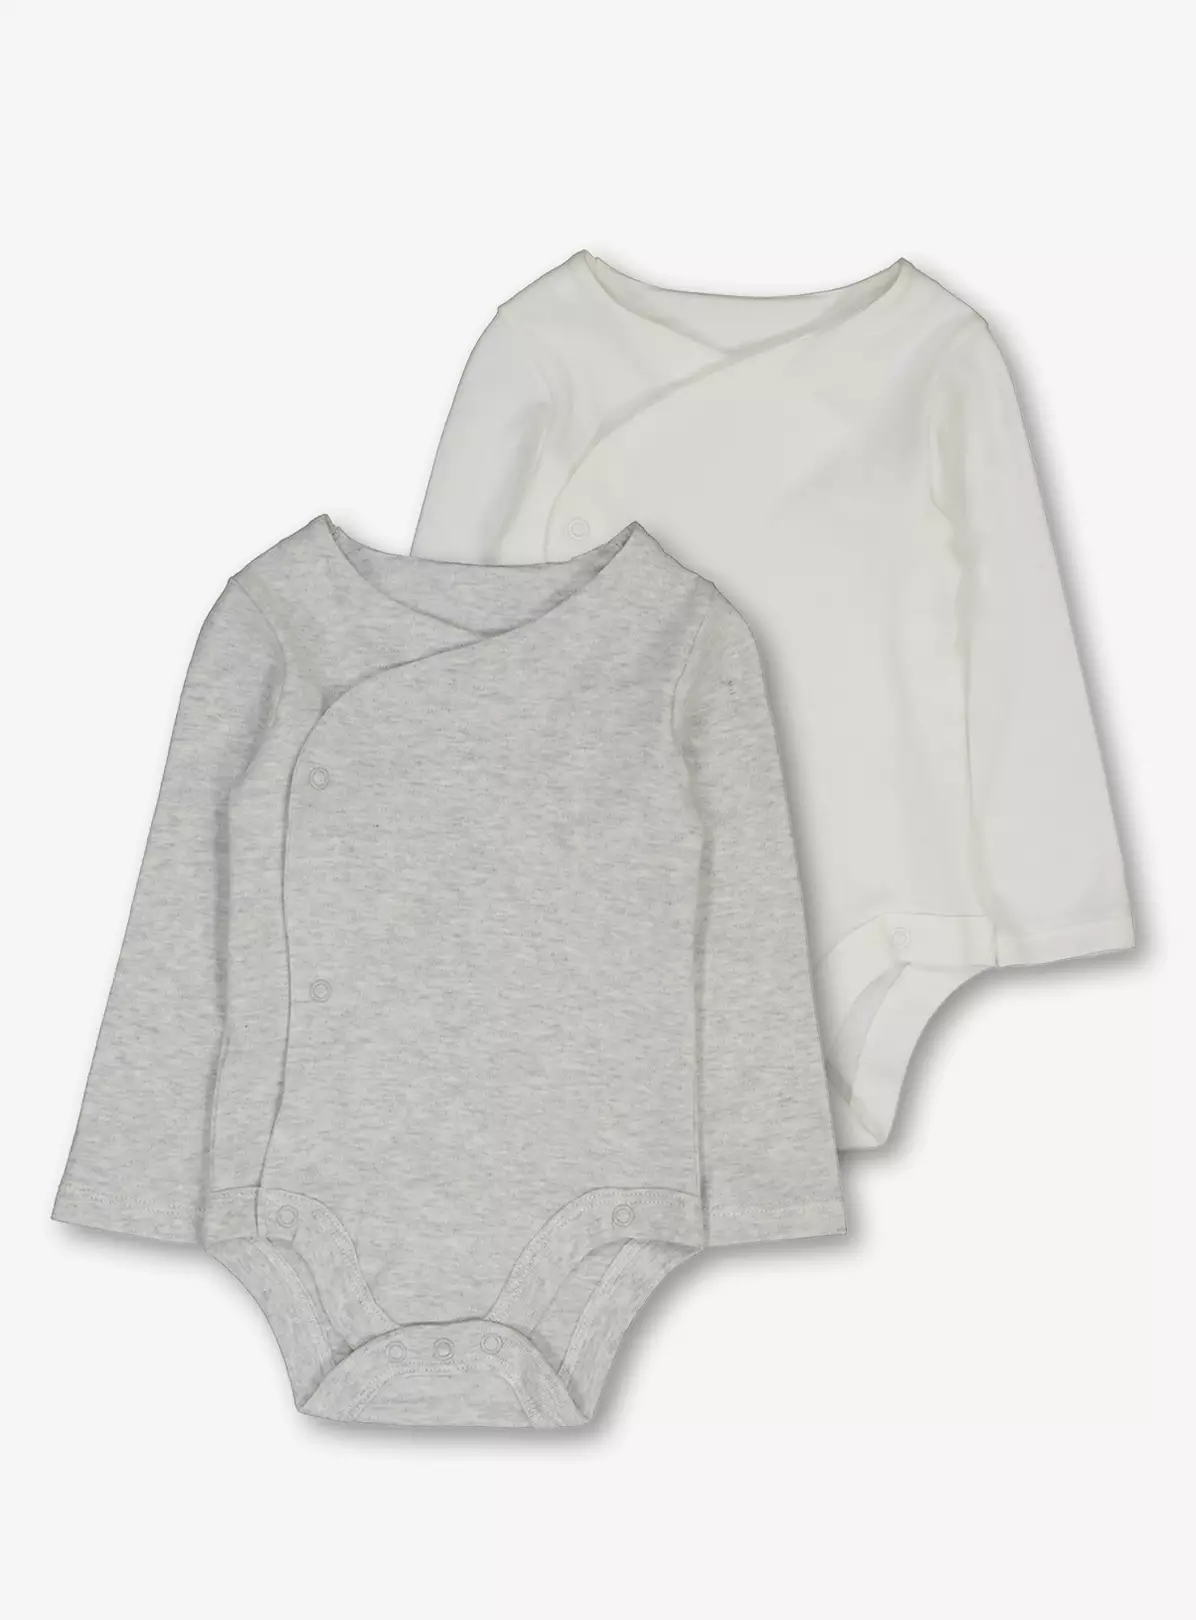 White & Grey Marl Long Sleeve Bodysuit 2 Pack – 18-24 months